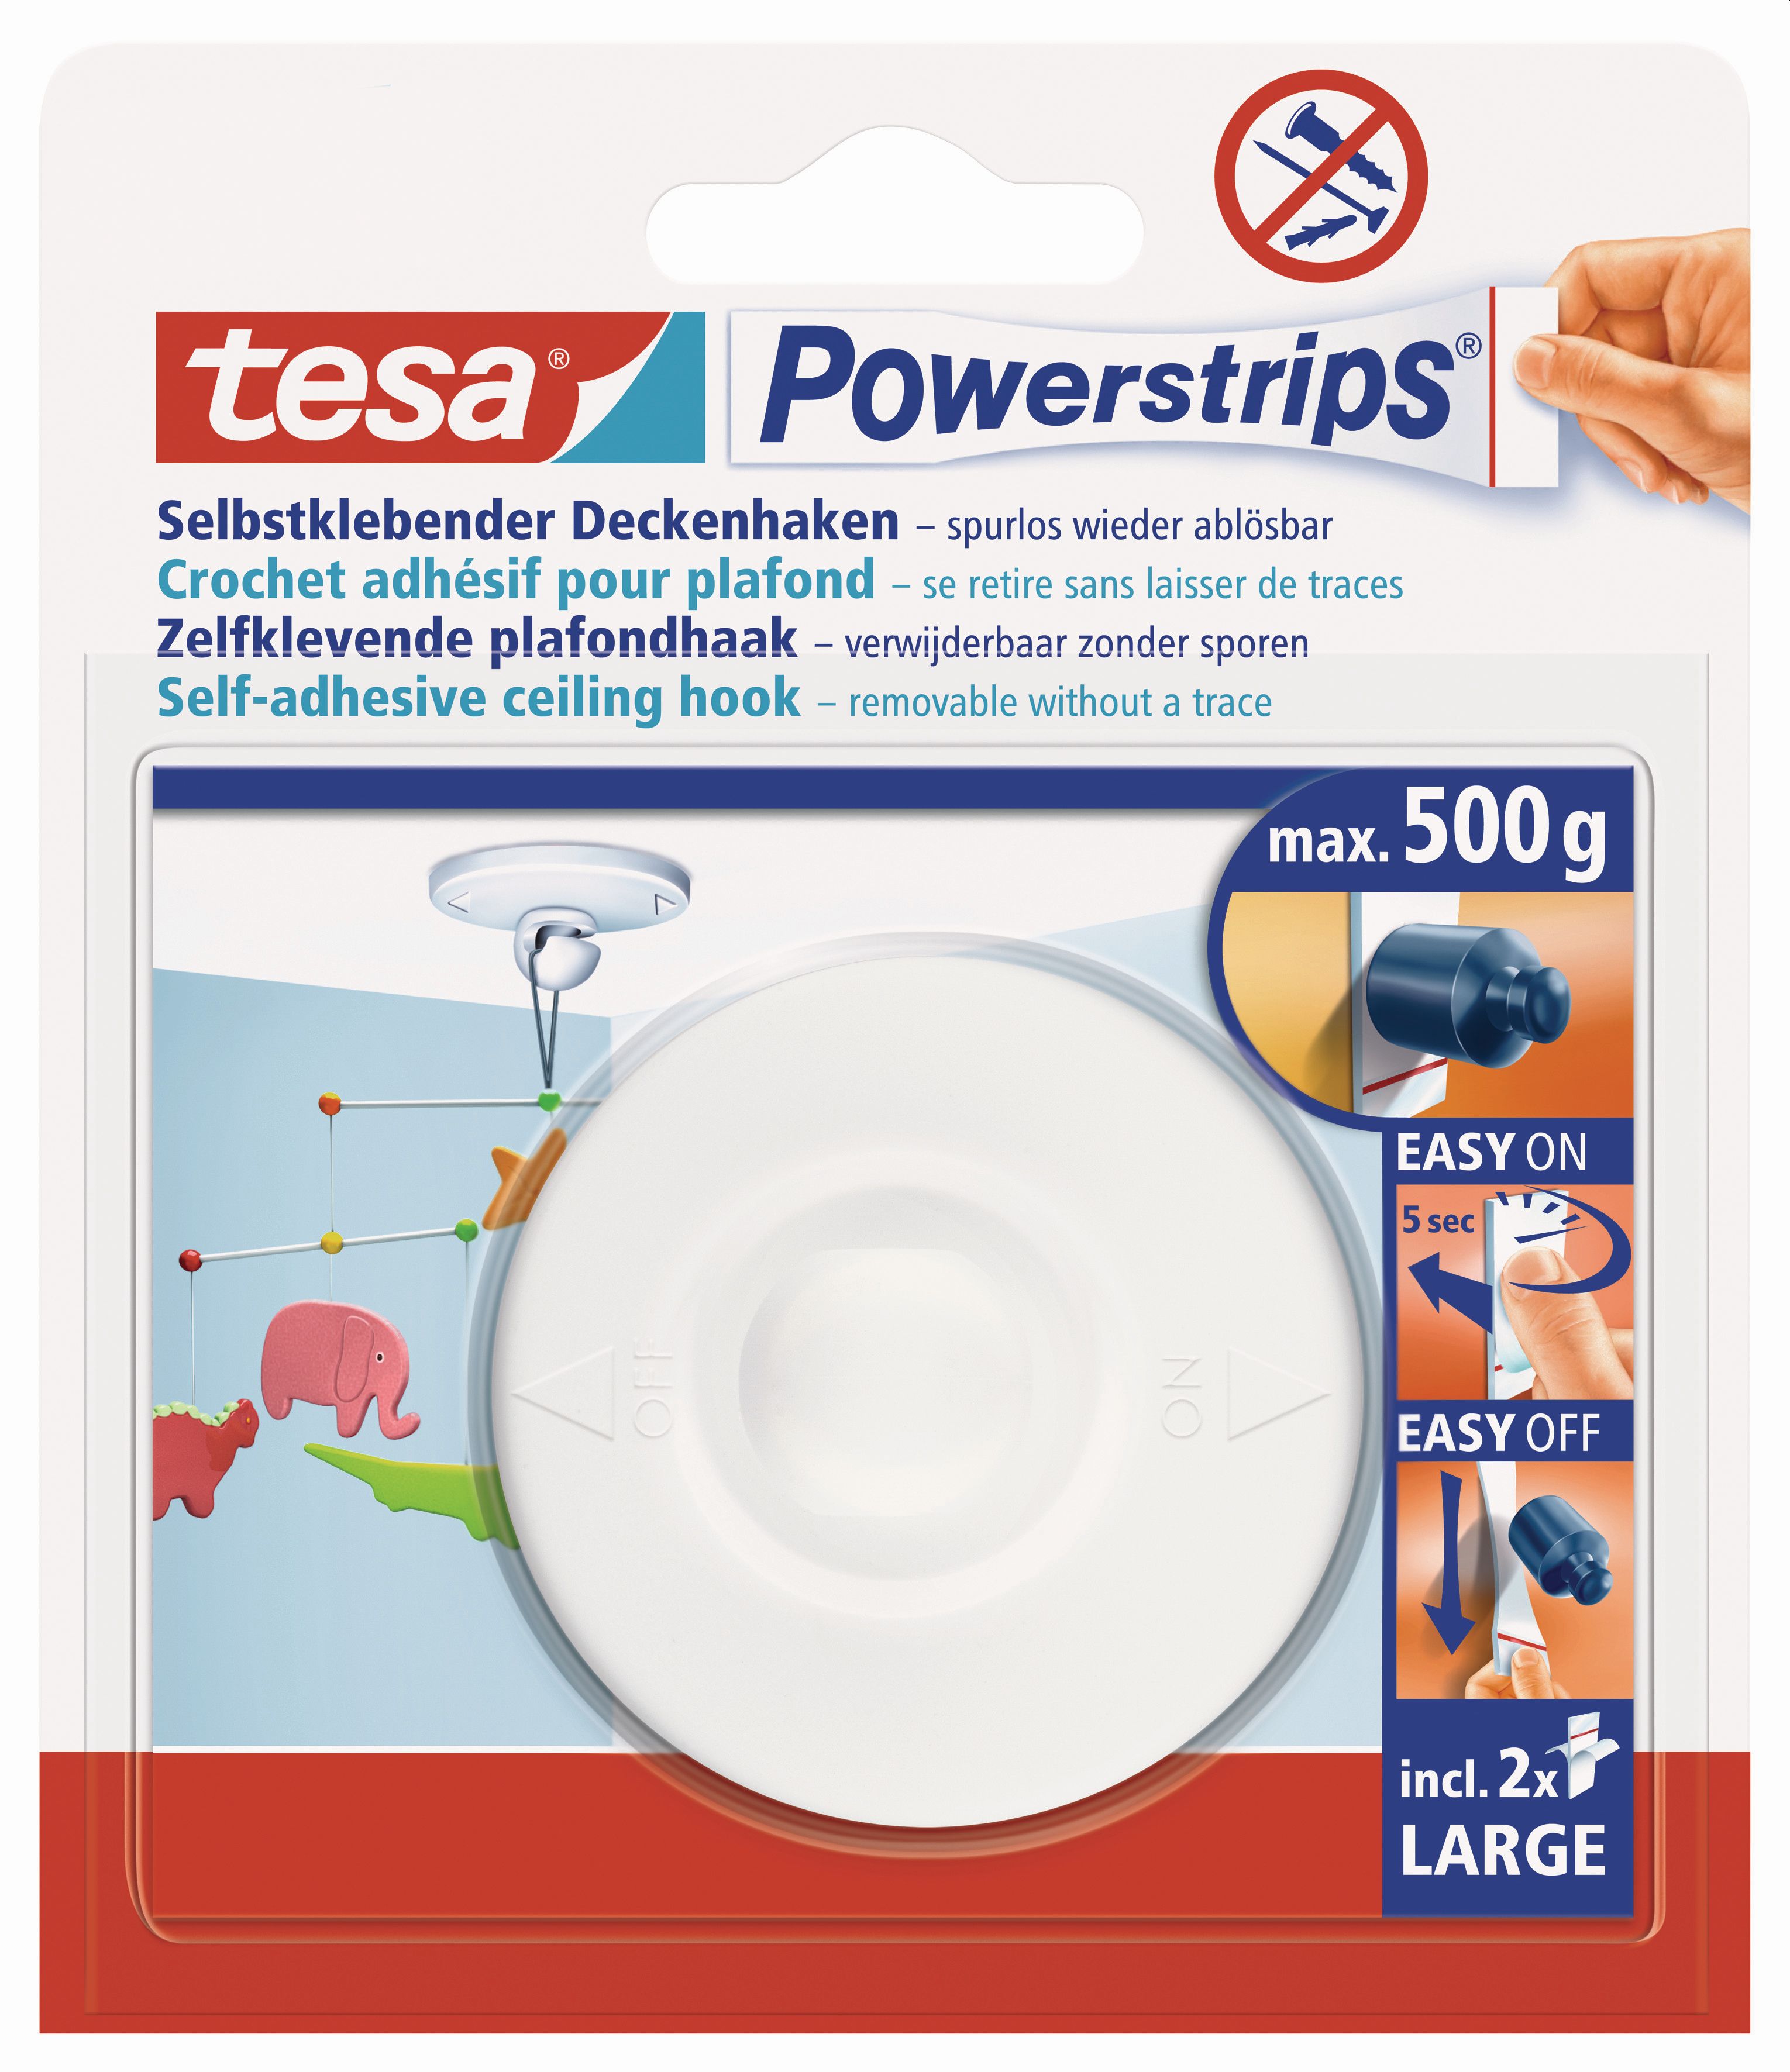 tesa Powerstrips® Deckenhaken (500 g)